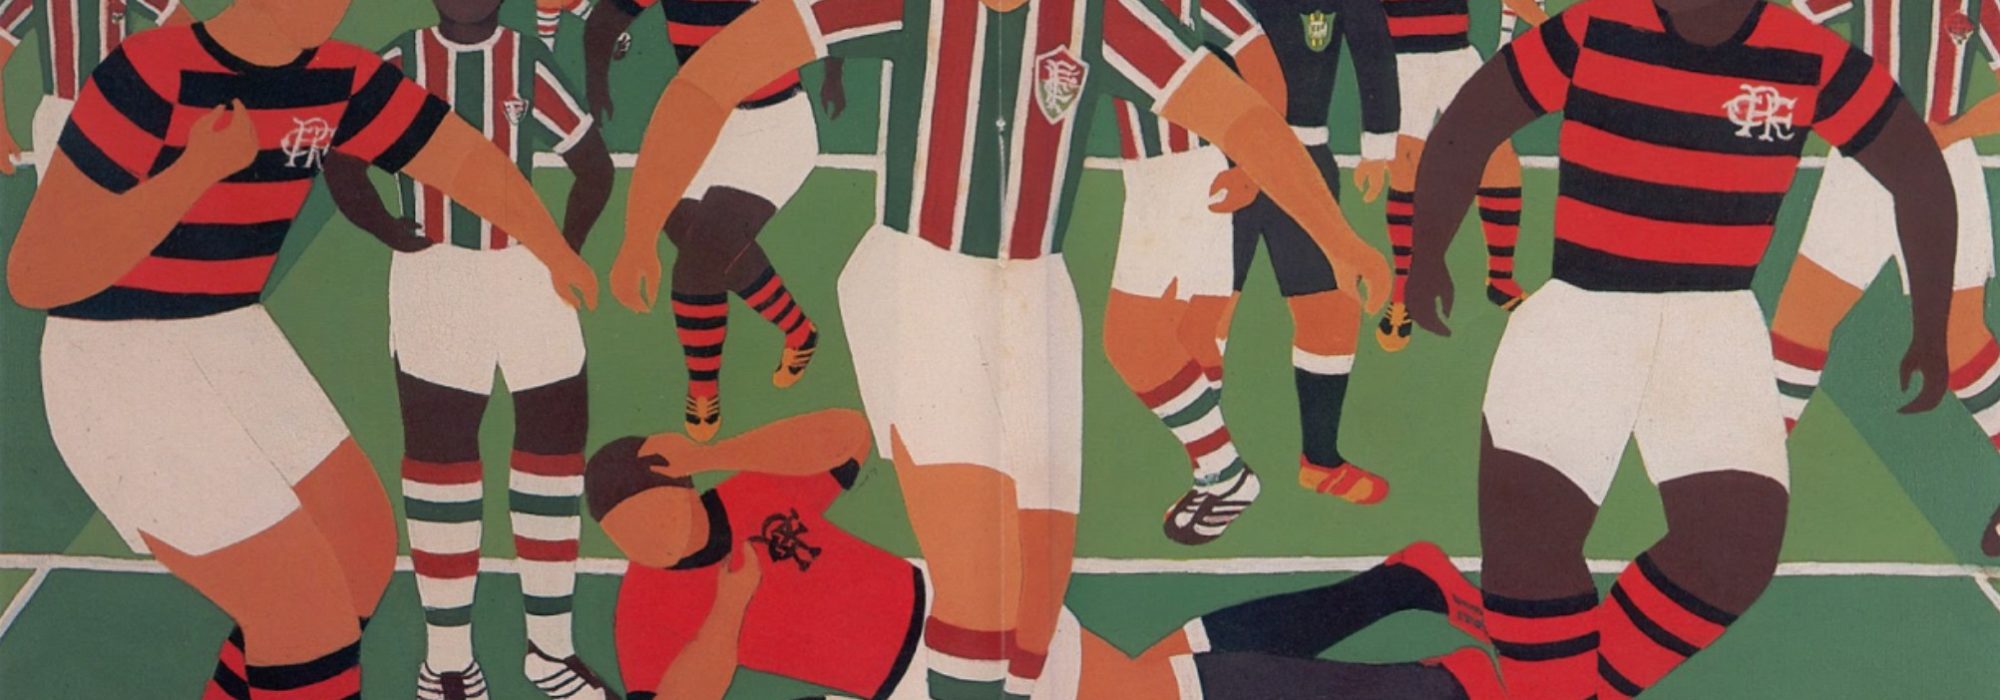 Imagem: Futebol Fla-Flu (Djanira, 1975)